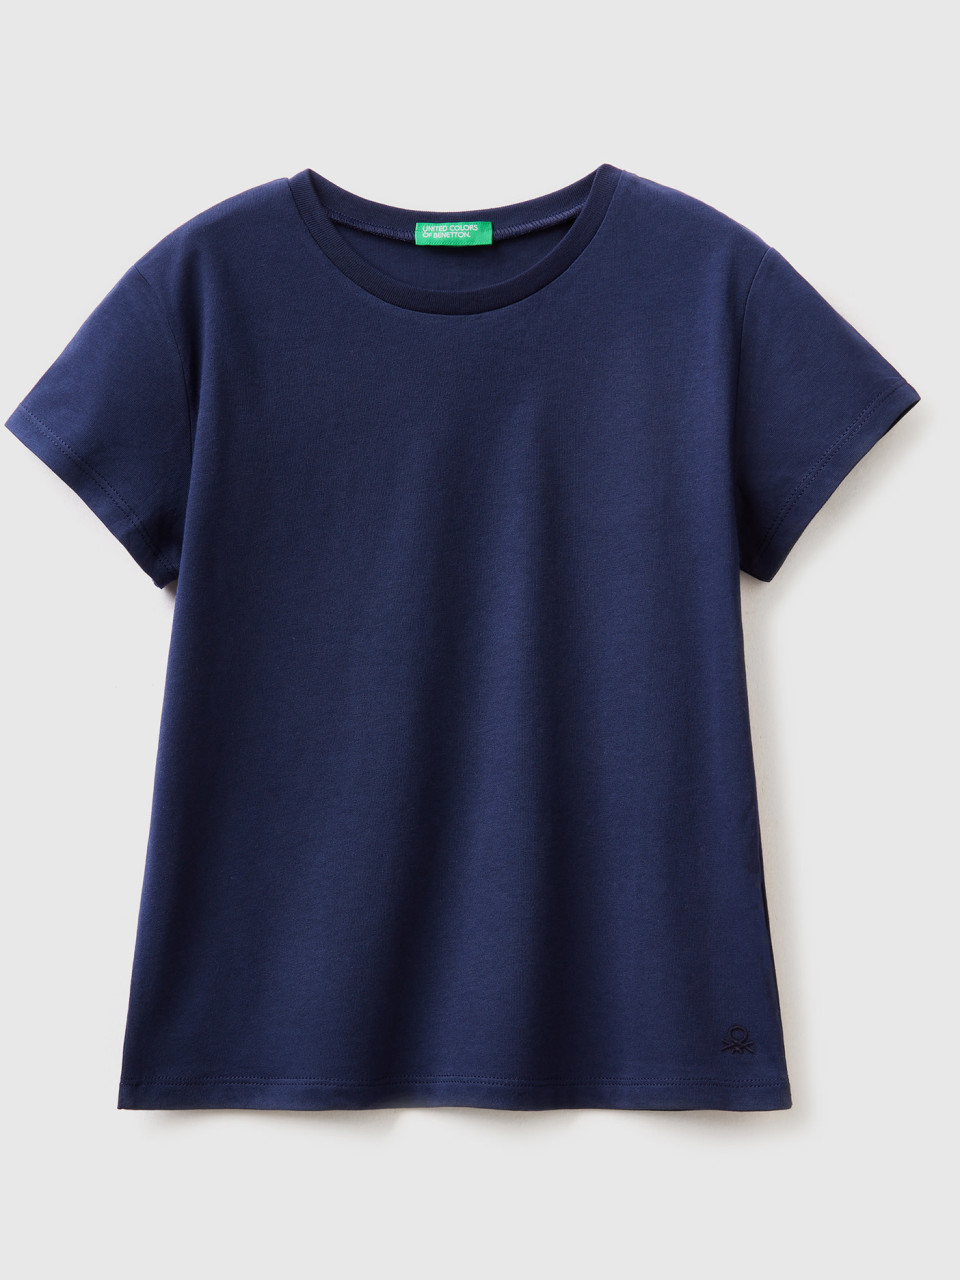 Benetton, T-shirt In Puro Cotone Bio, Blu Scuro, Bambini